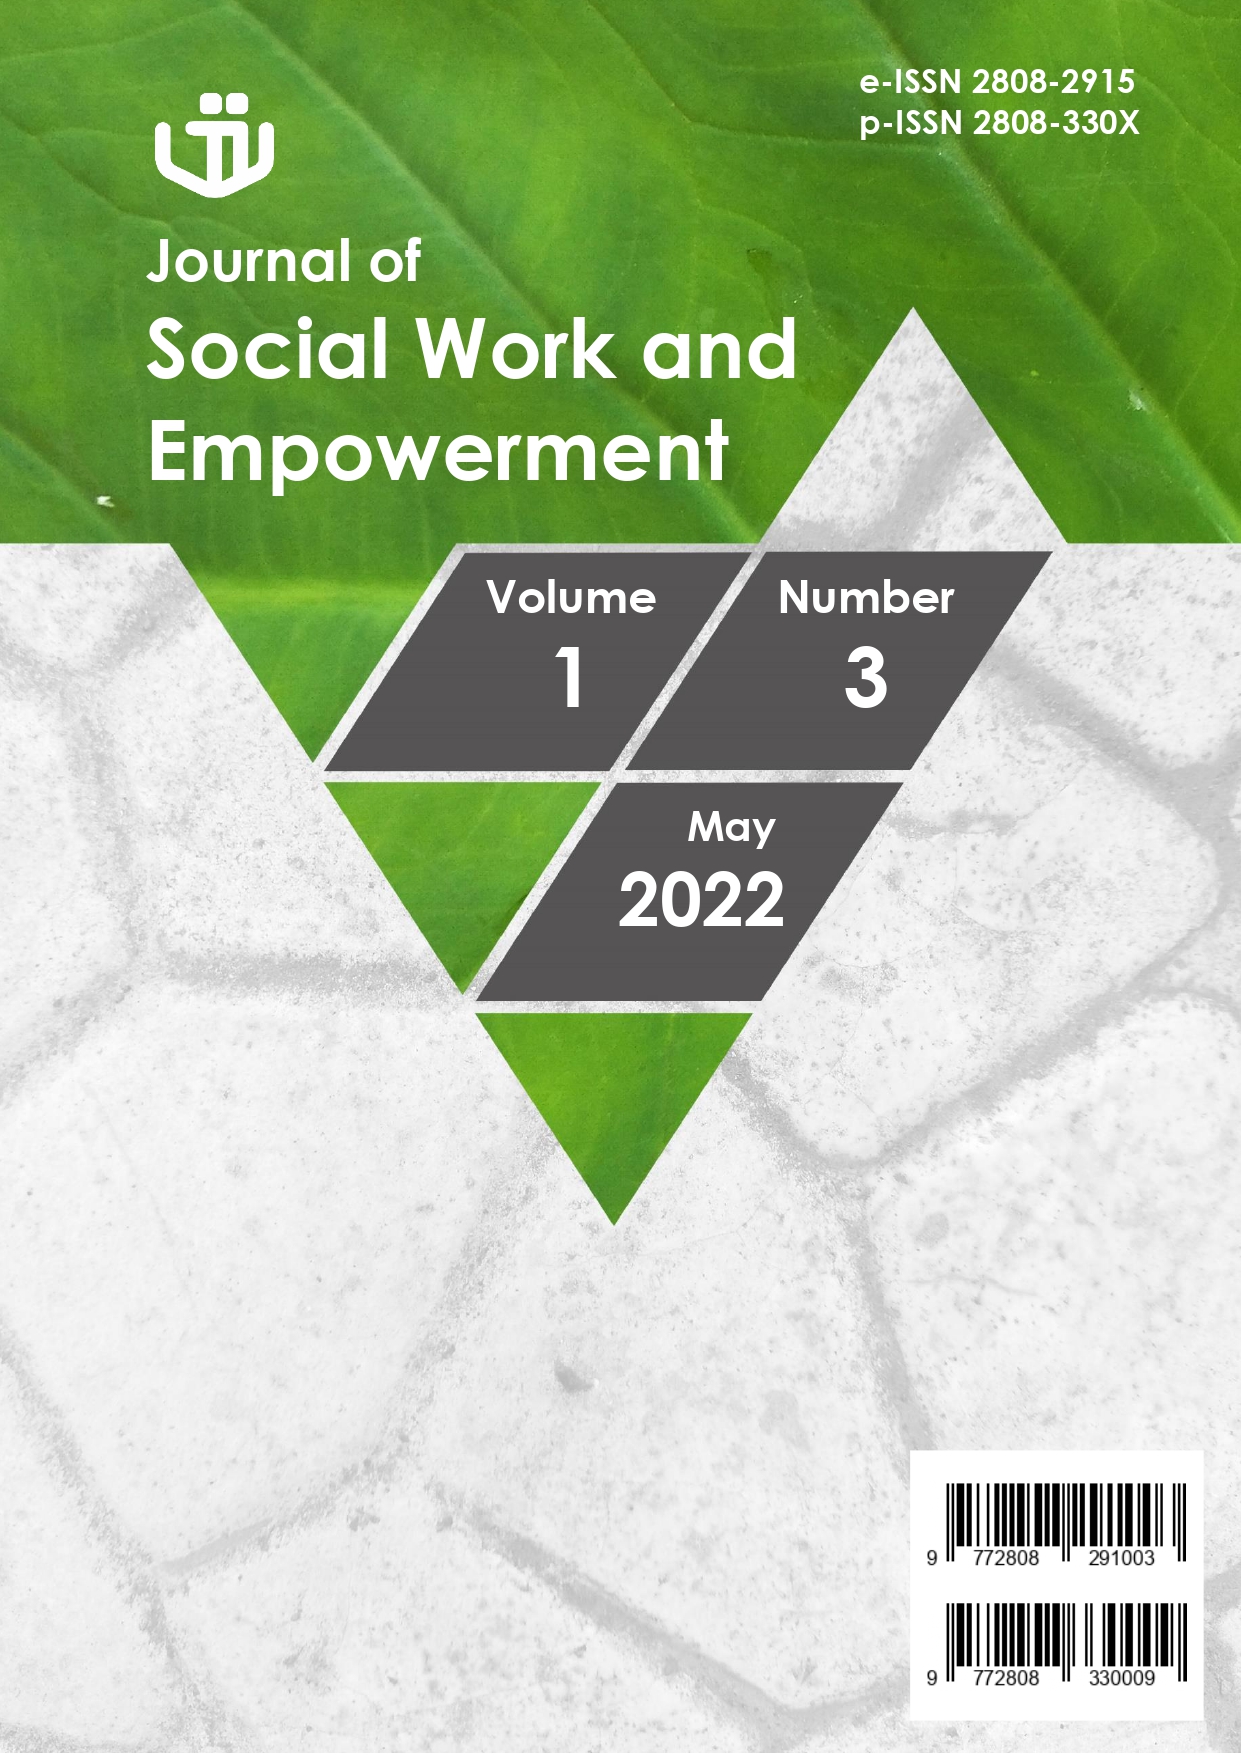 					Lihat Vol 1 No 3 (2022): Journal of Social Work and Empowerment - Mei 2022
				